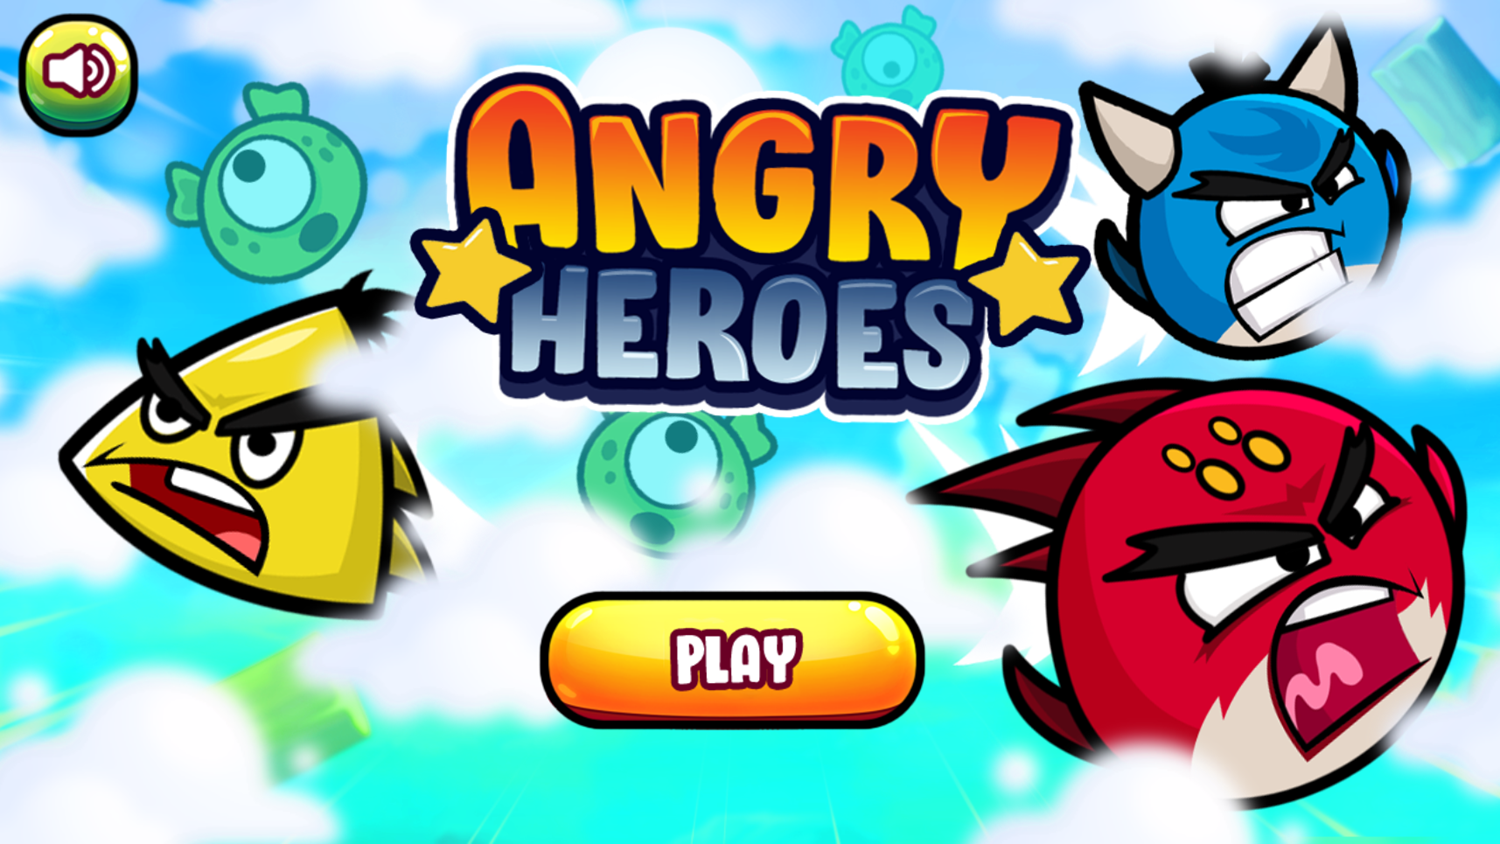 Angry Heroes Game Welcome Screen Screenshot.